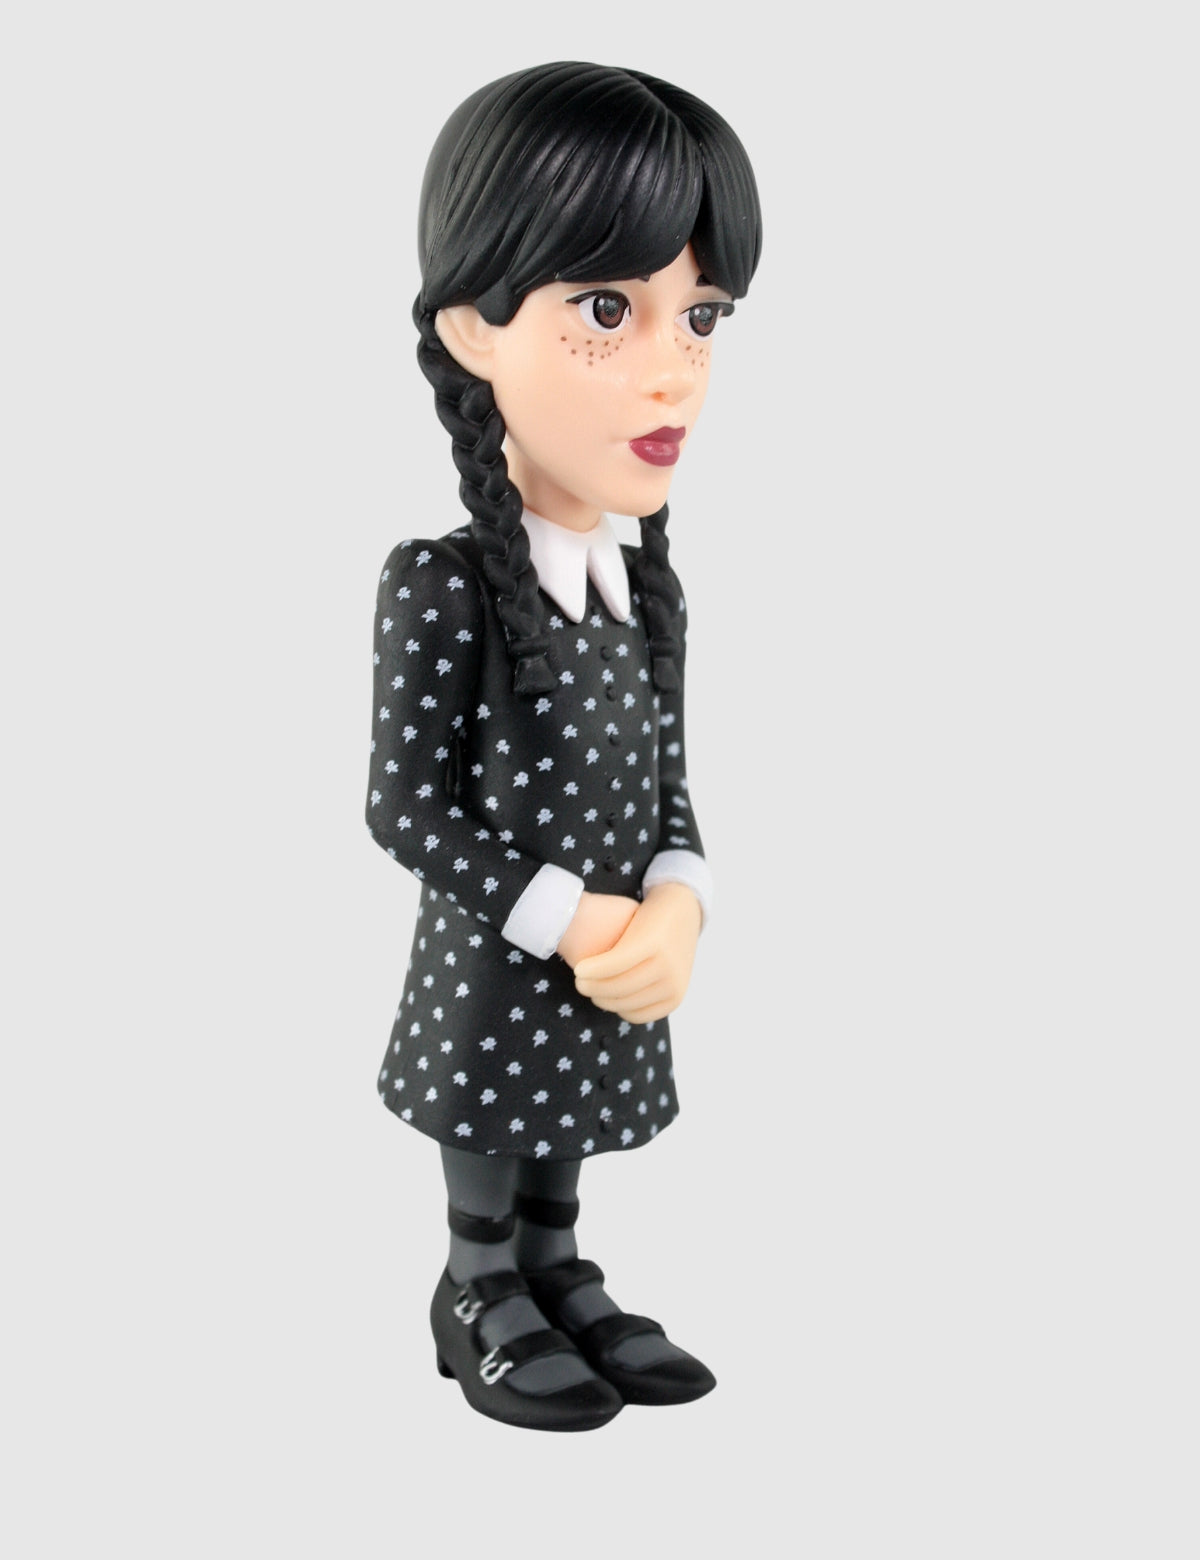 Mercredi - mercredi addams - figurine minix 12cm